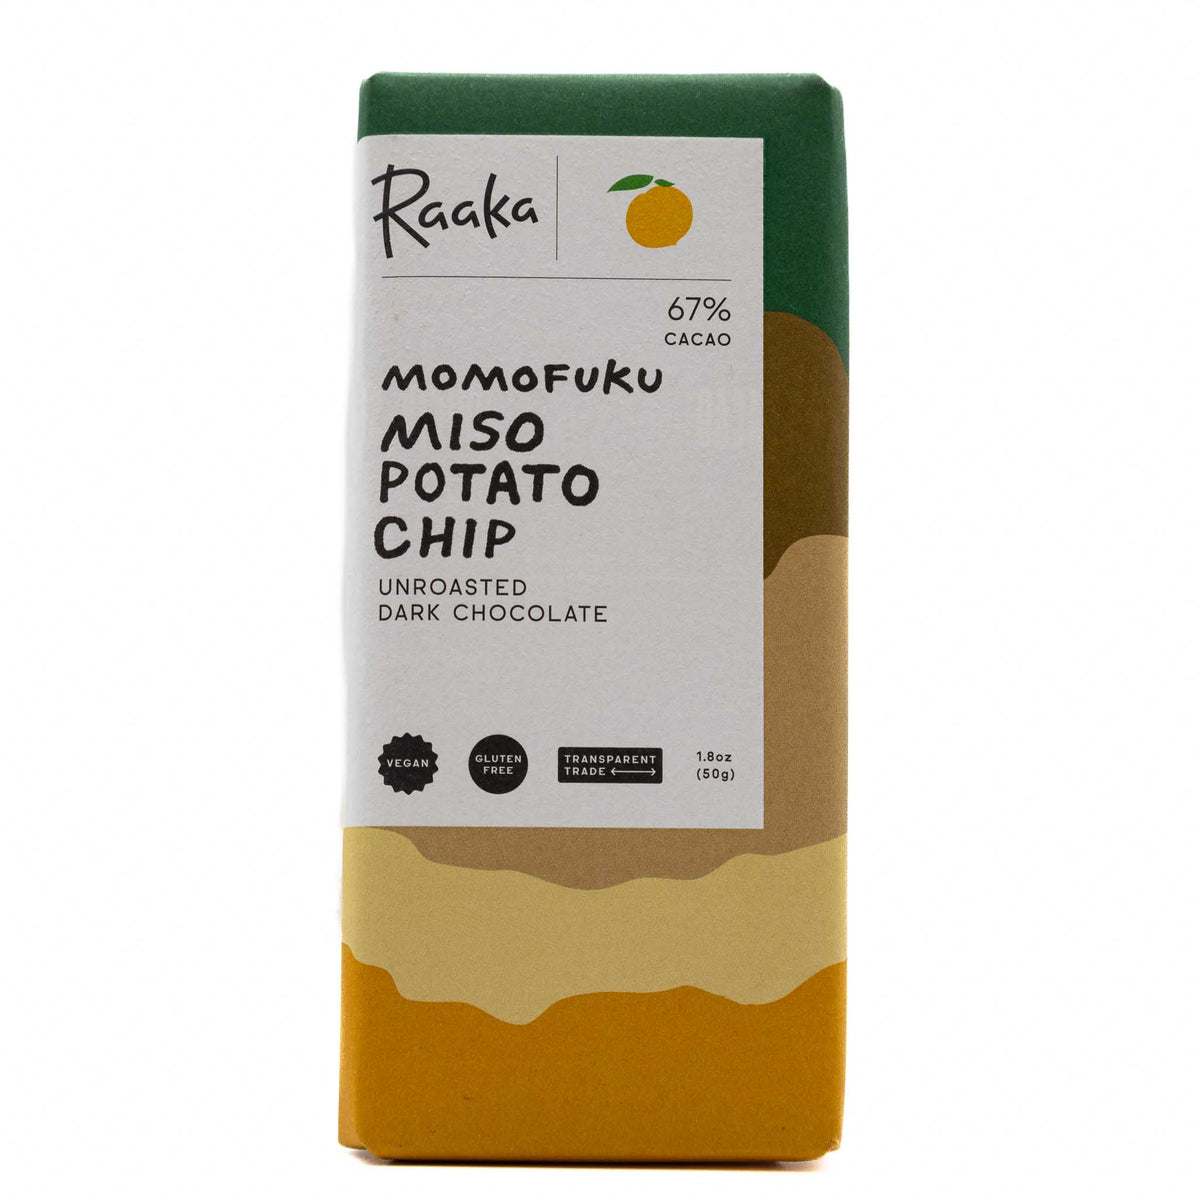 Raaka x Momofuku Chocolate Bar Miso Potato Chip